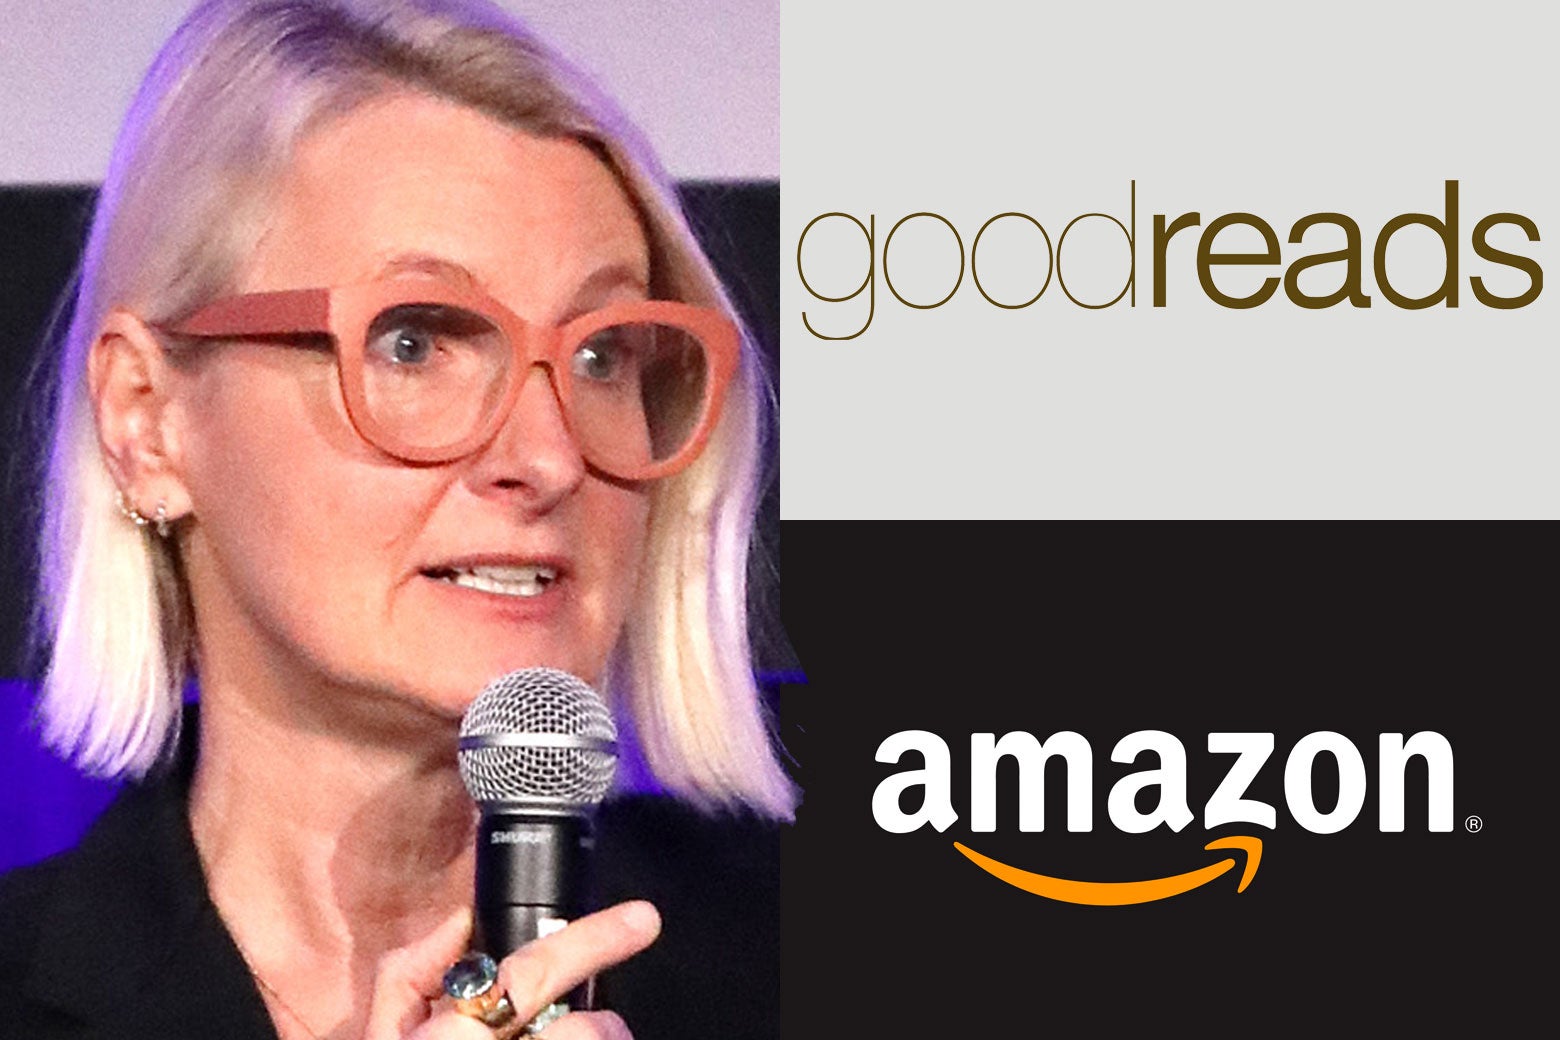 Amazon Is Letting Something Terrible Happen to Authors on Goodreads Angela Lashbrook